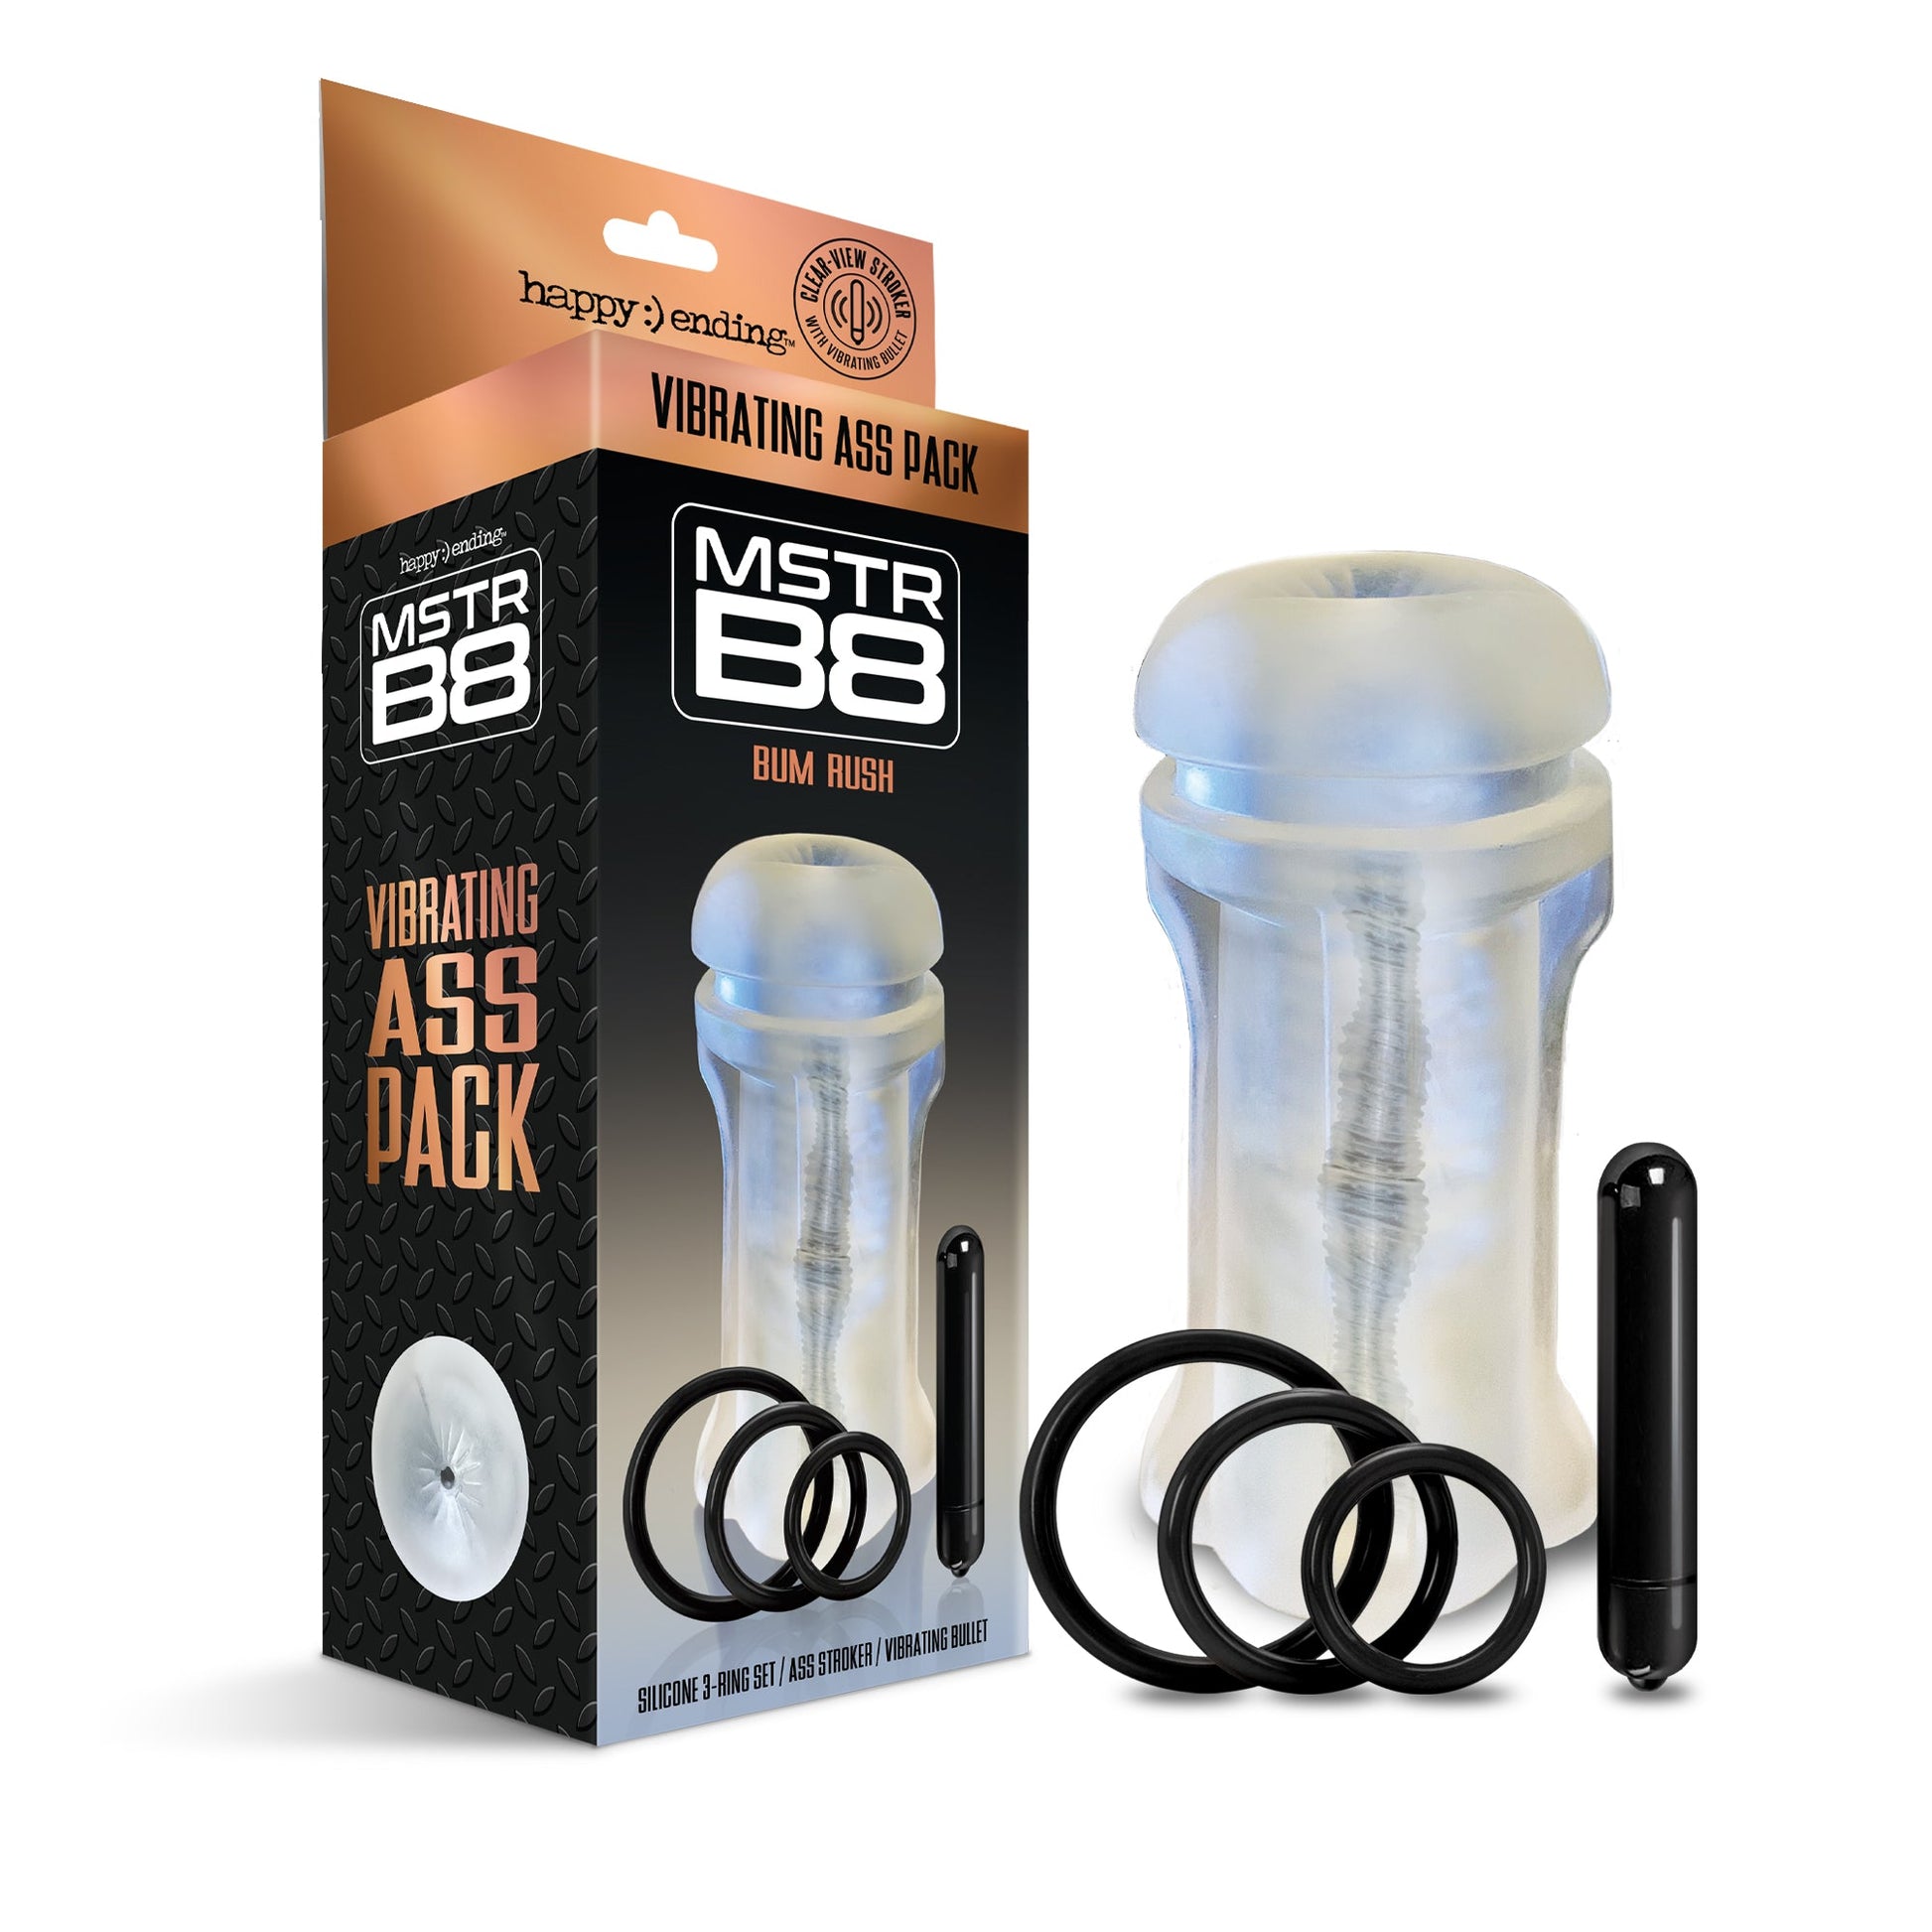 MSTR B8 Vibrating Ass Pack, Bum Rush, Five PC Kit - THES